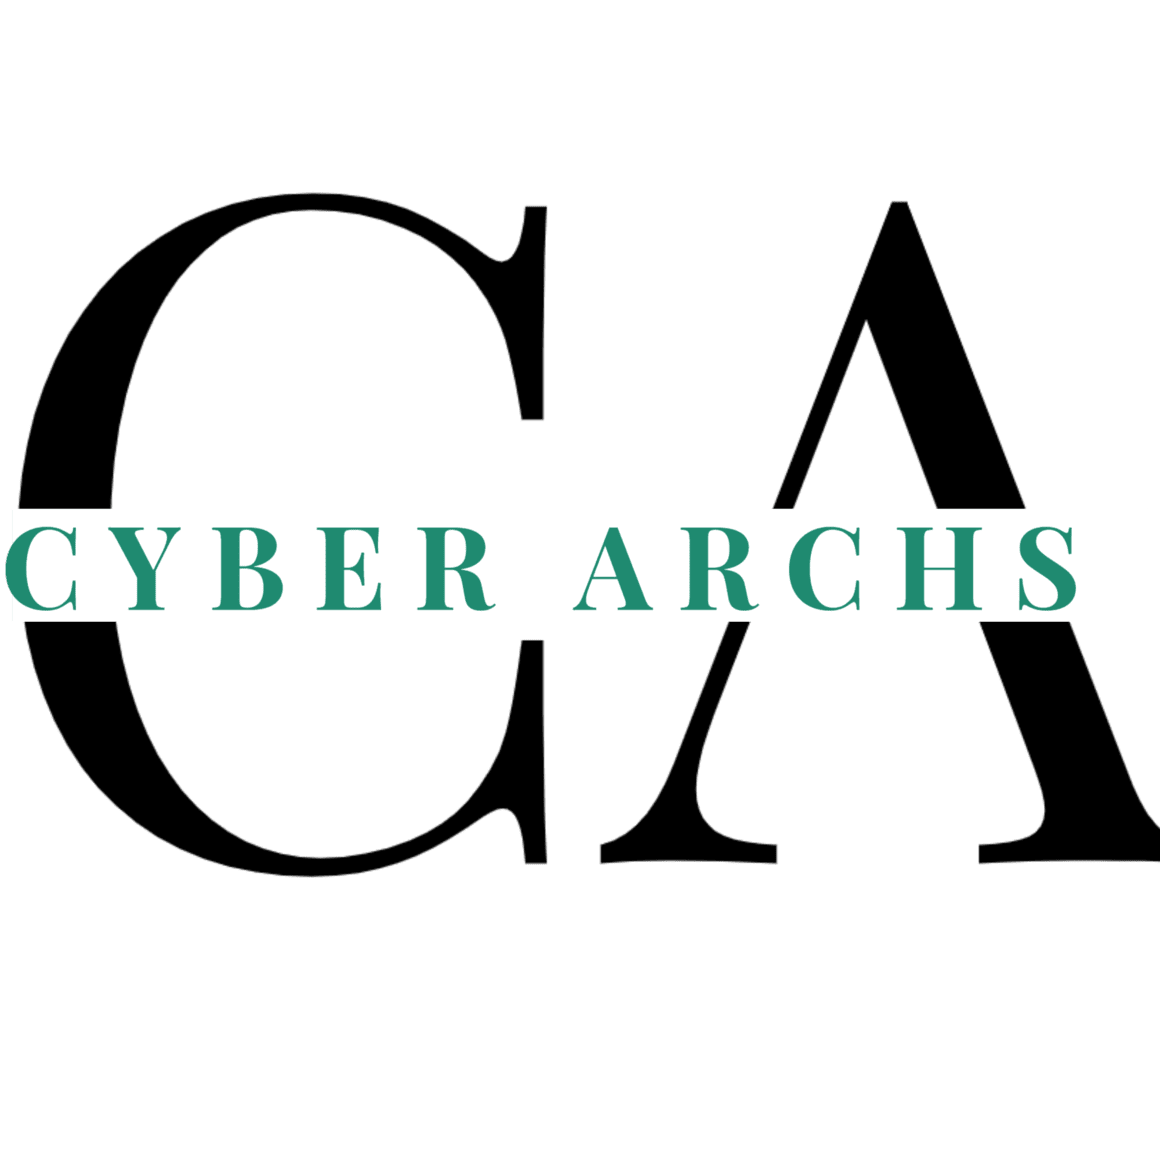 Cyberarchs